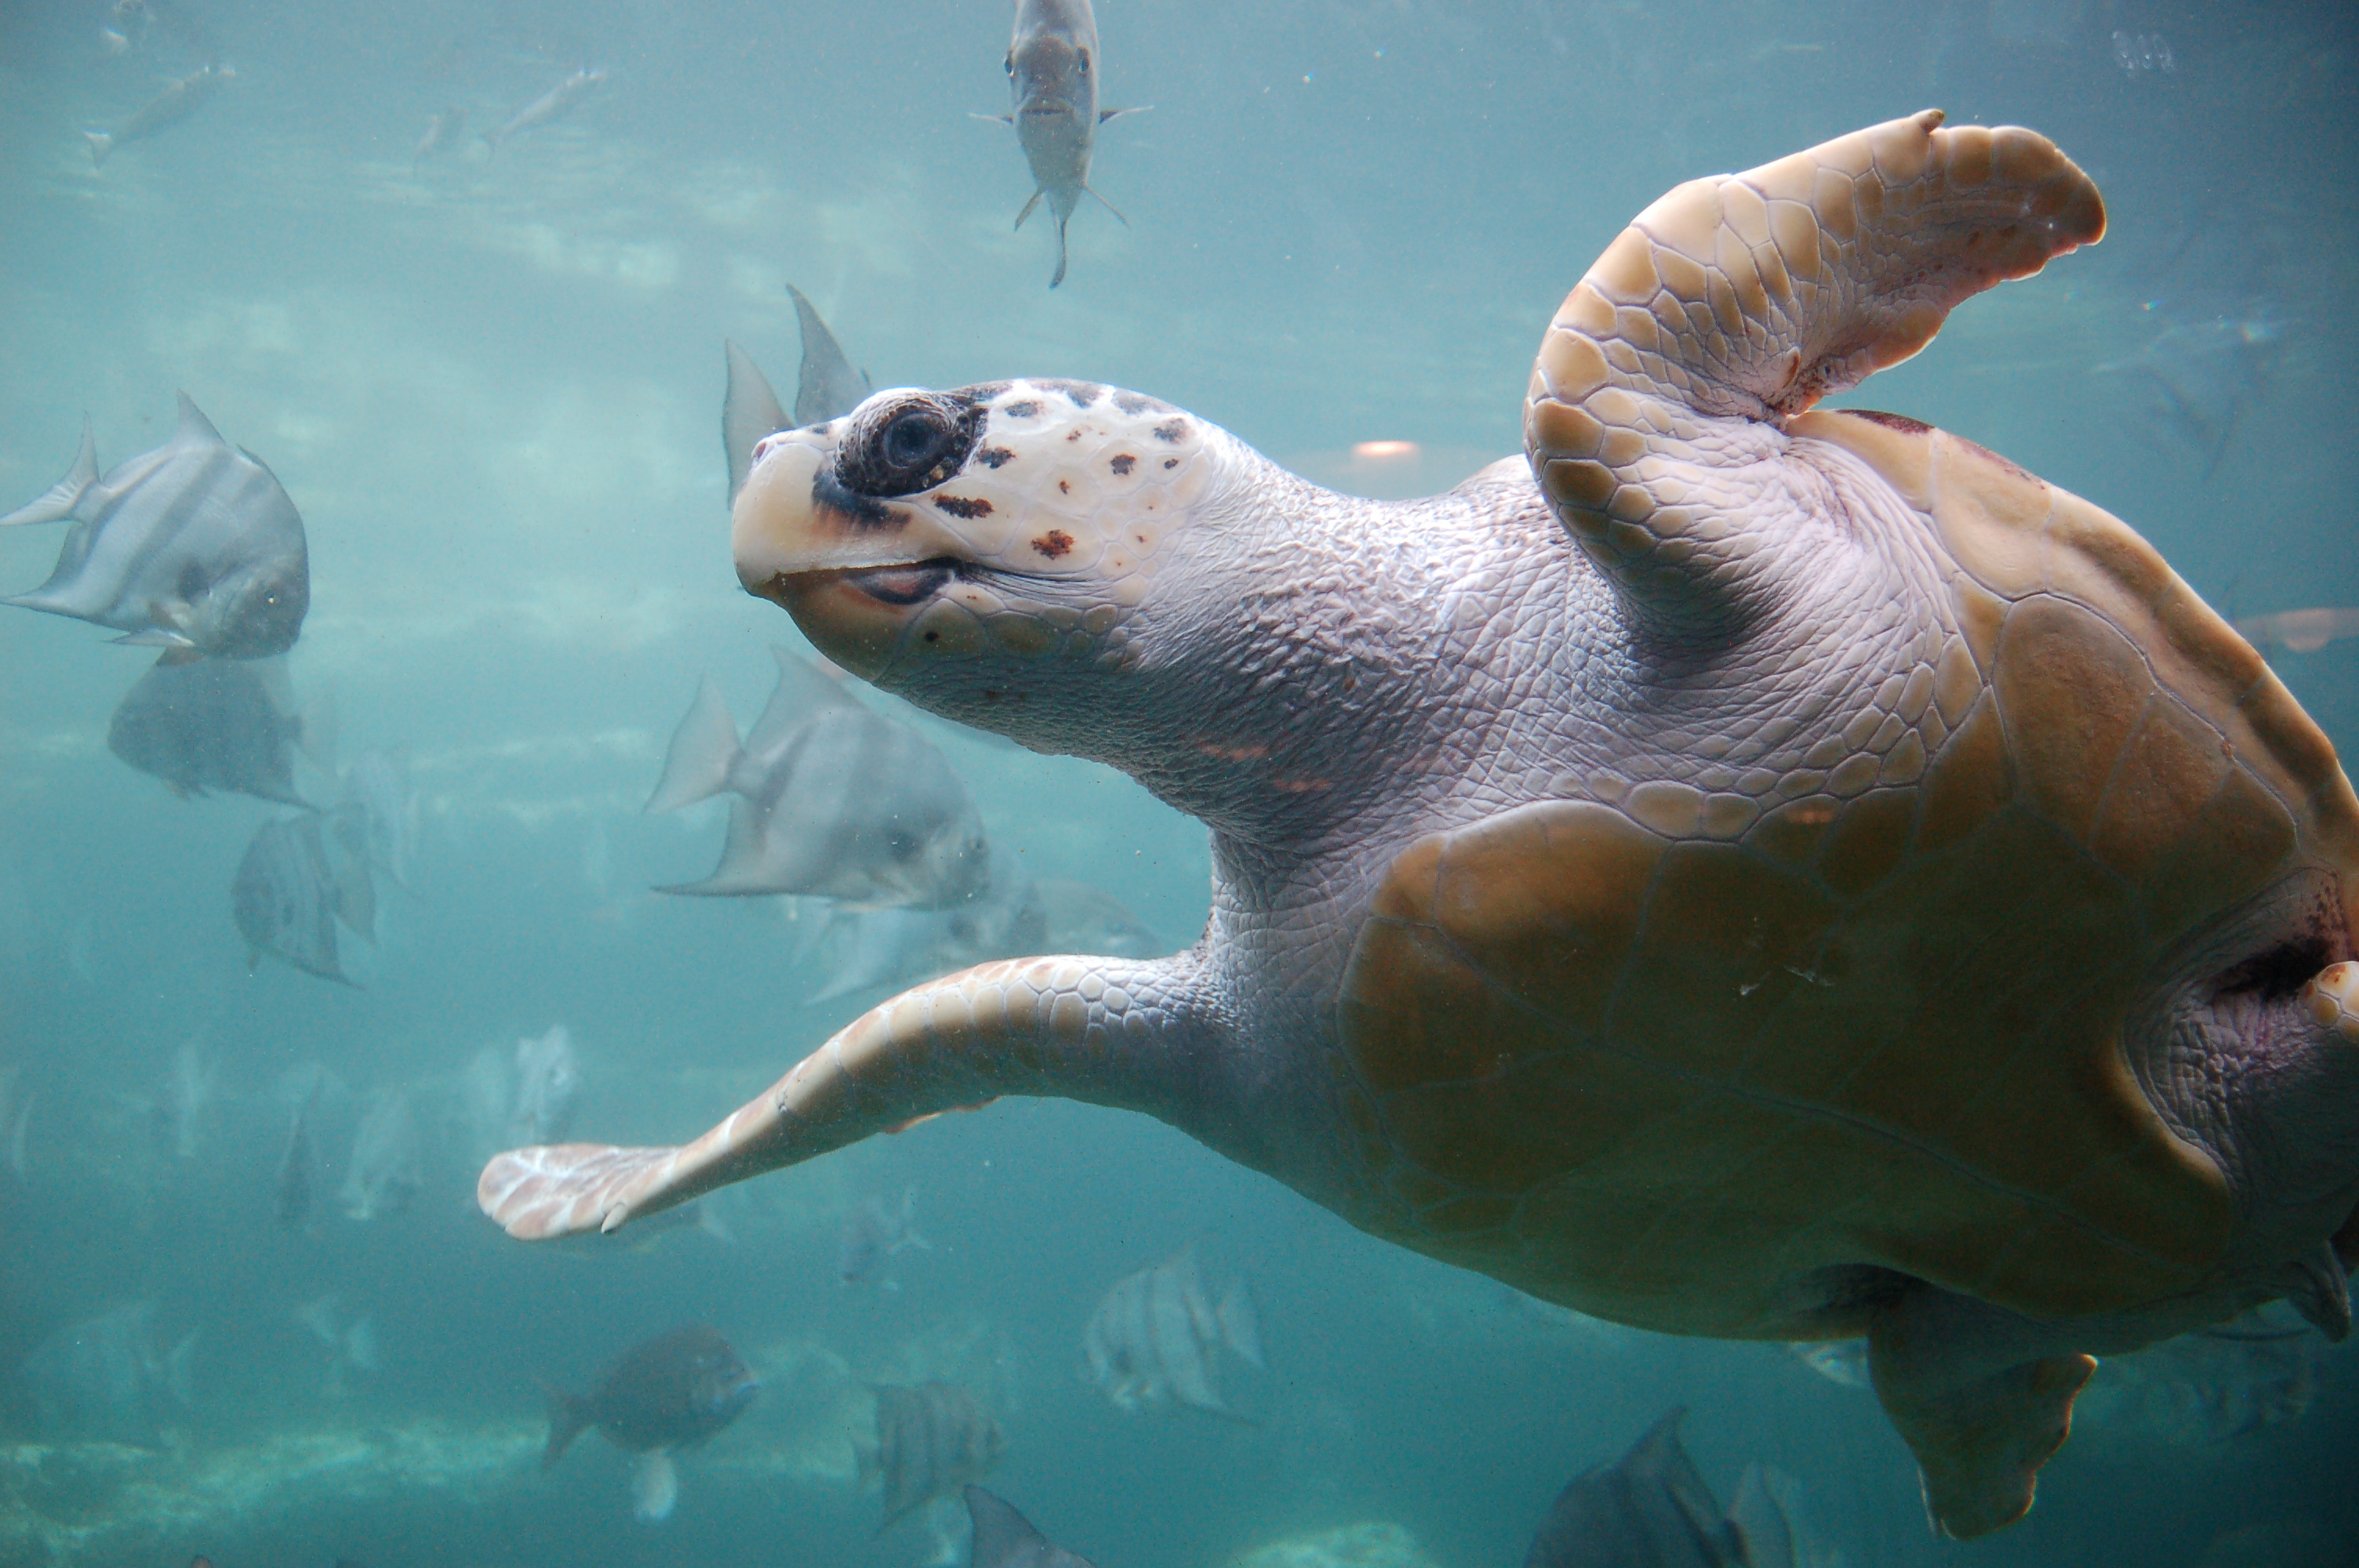 A loggerhead sea turtle in an aquarium tank swims overhead.  The underside is visible.